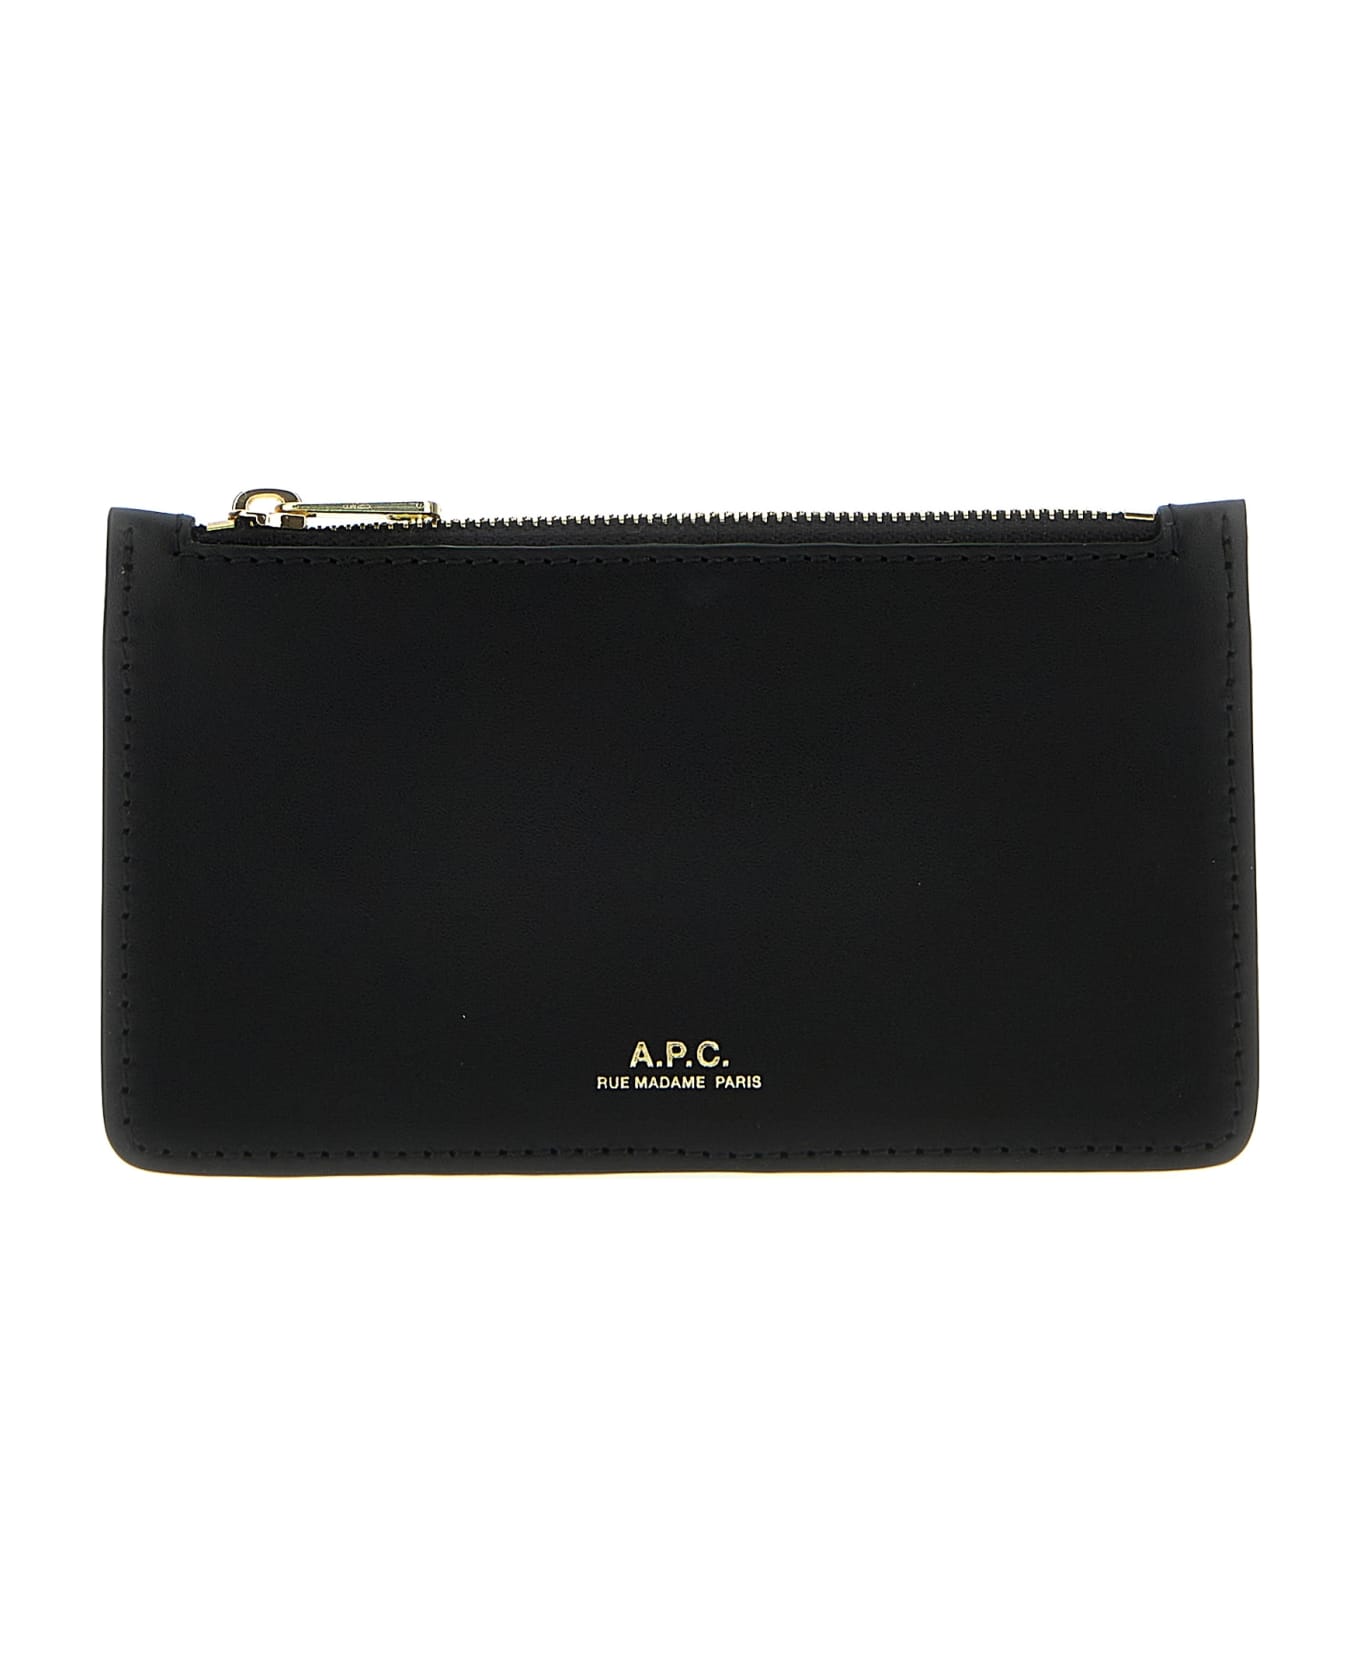 A.P.C. Zip Card Holder - Black